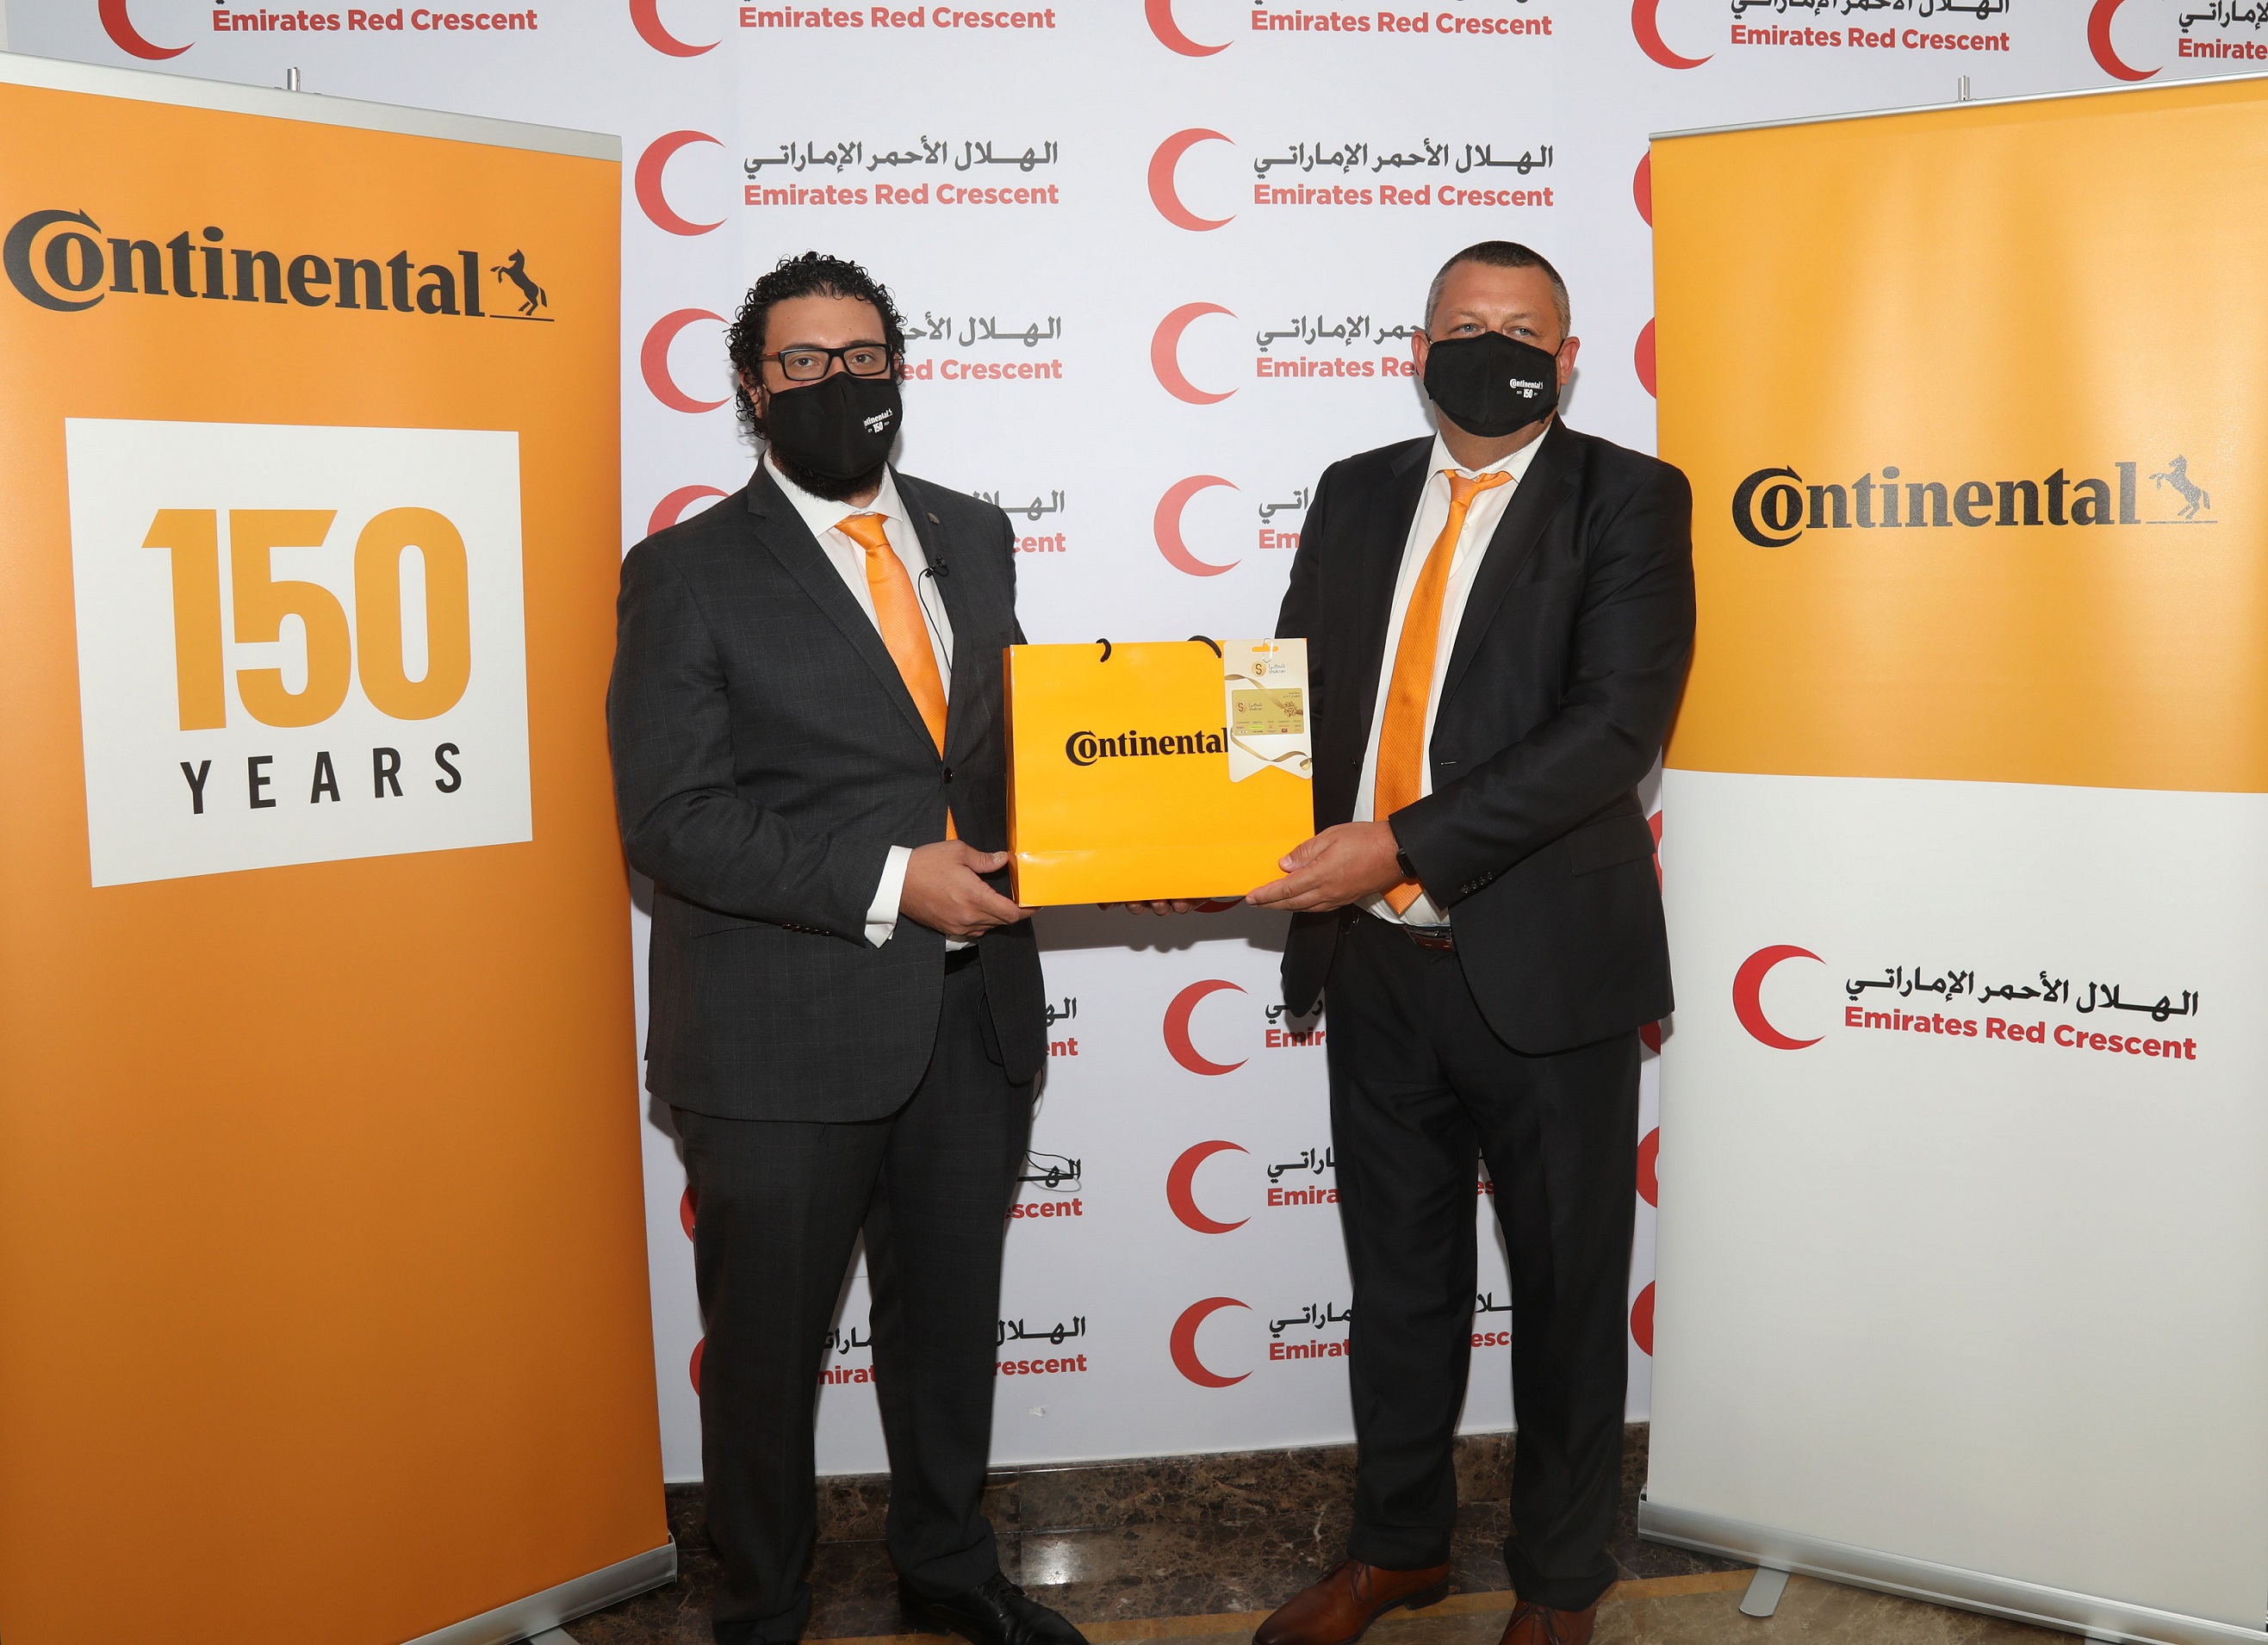 Continental Celebrates 150 Years through Ramadan Campaign in the UAE